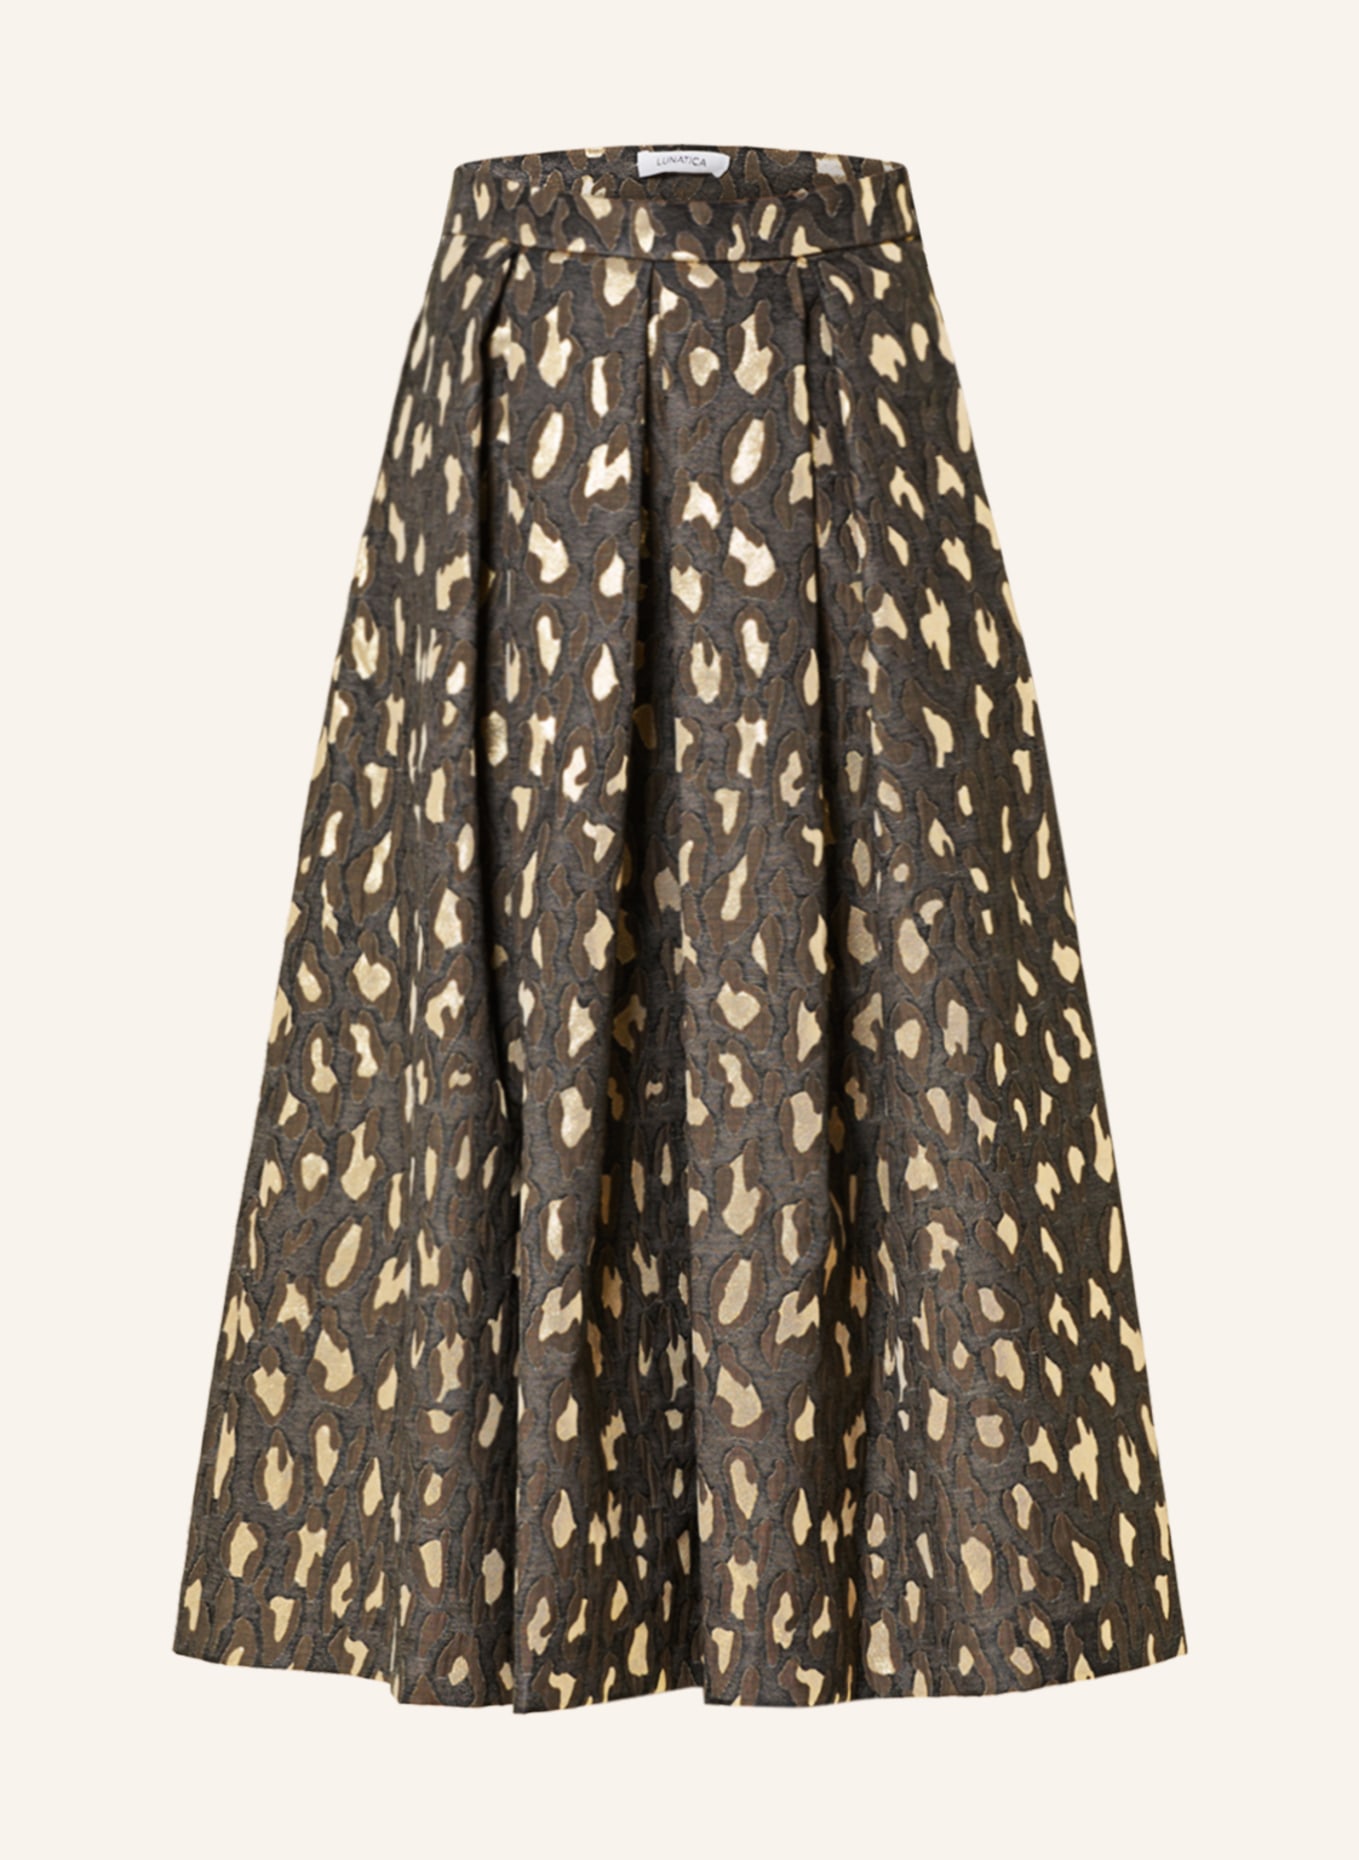 LUNATICA MILANO Jacquard skirt with glitter thread, Color: DARK GRAY/ GOLD (Image 1)